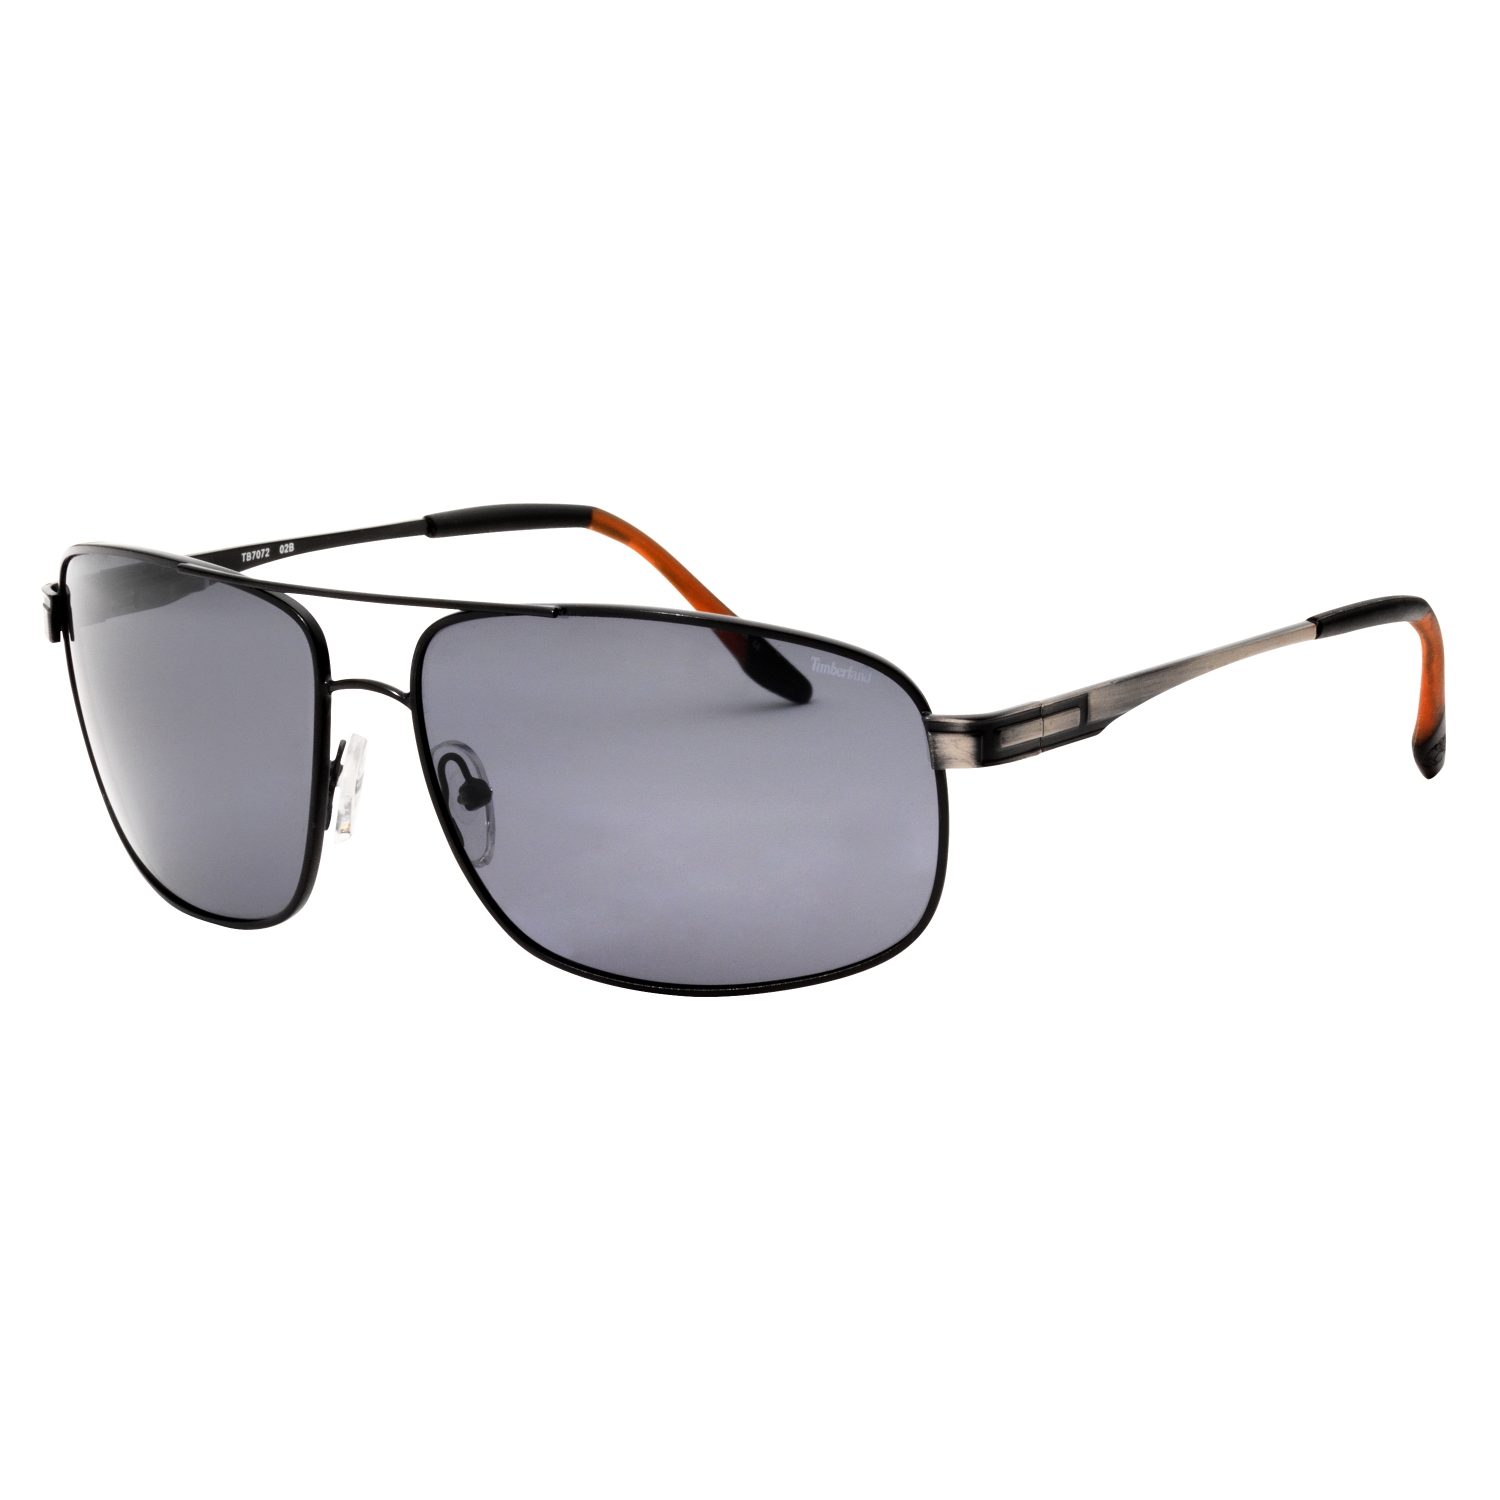 Timberland - Accessories - Sunglasses